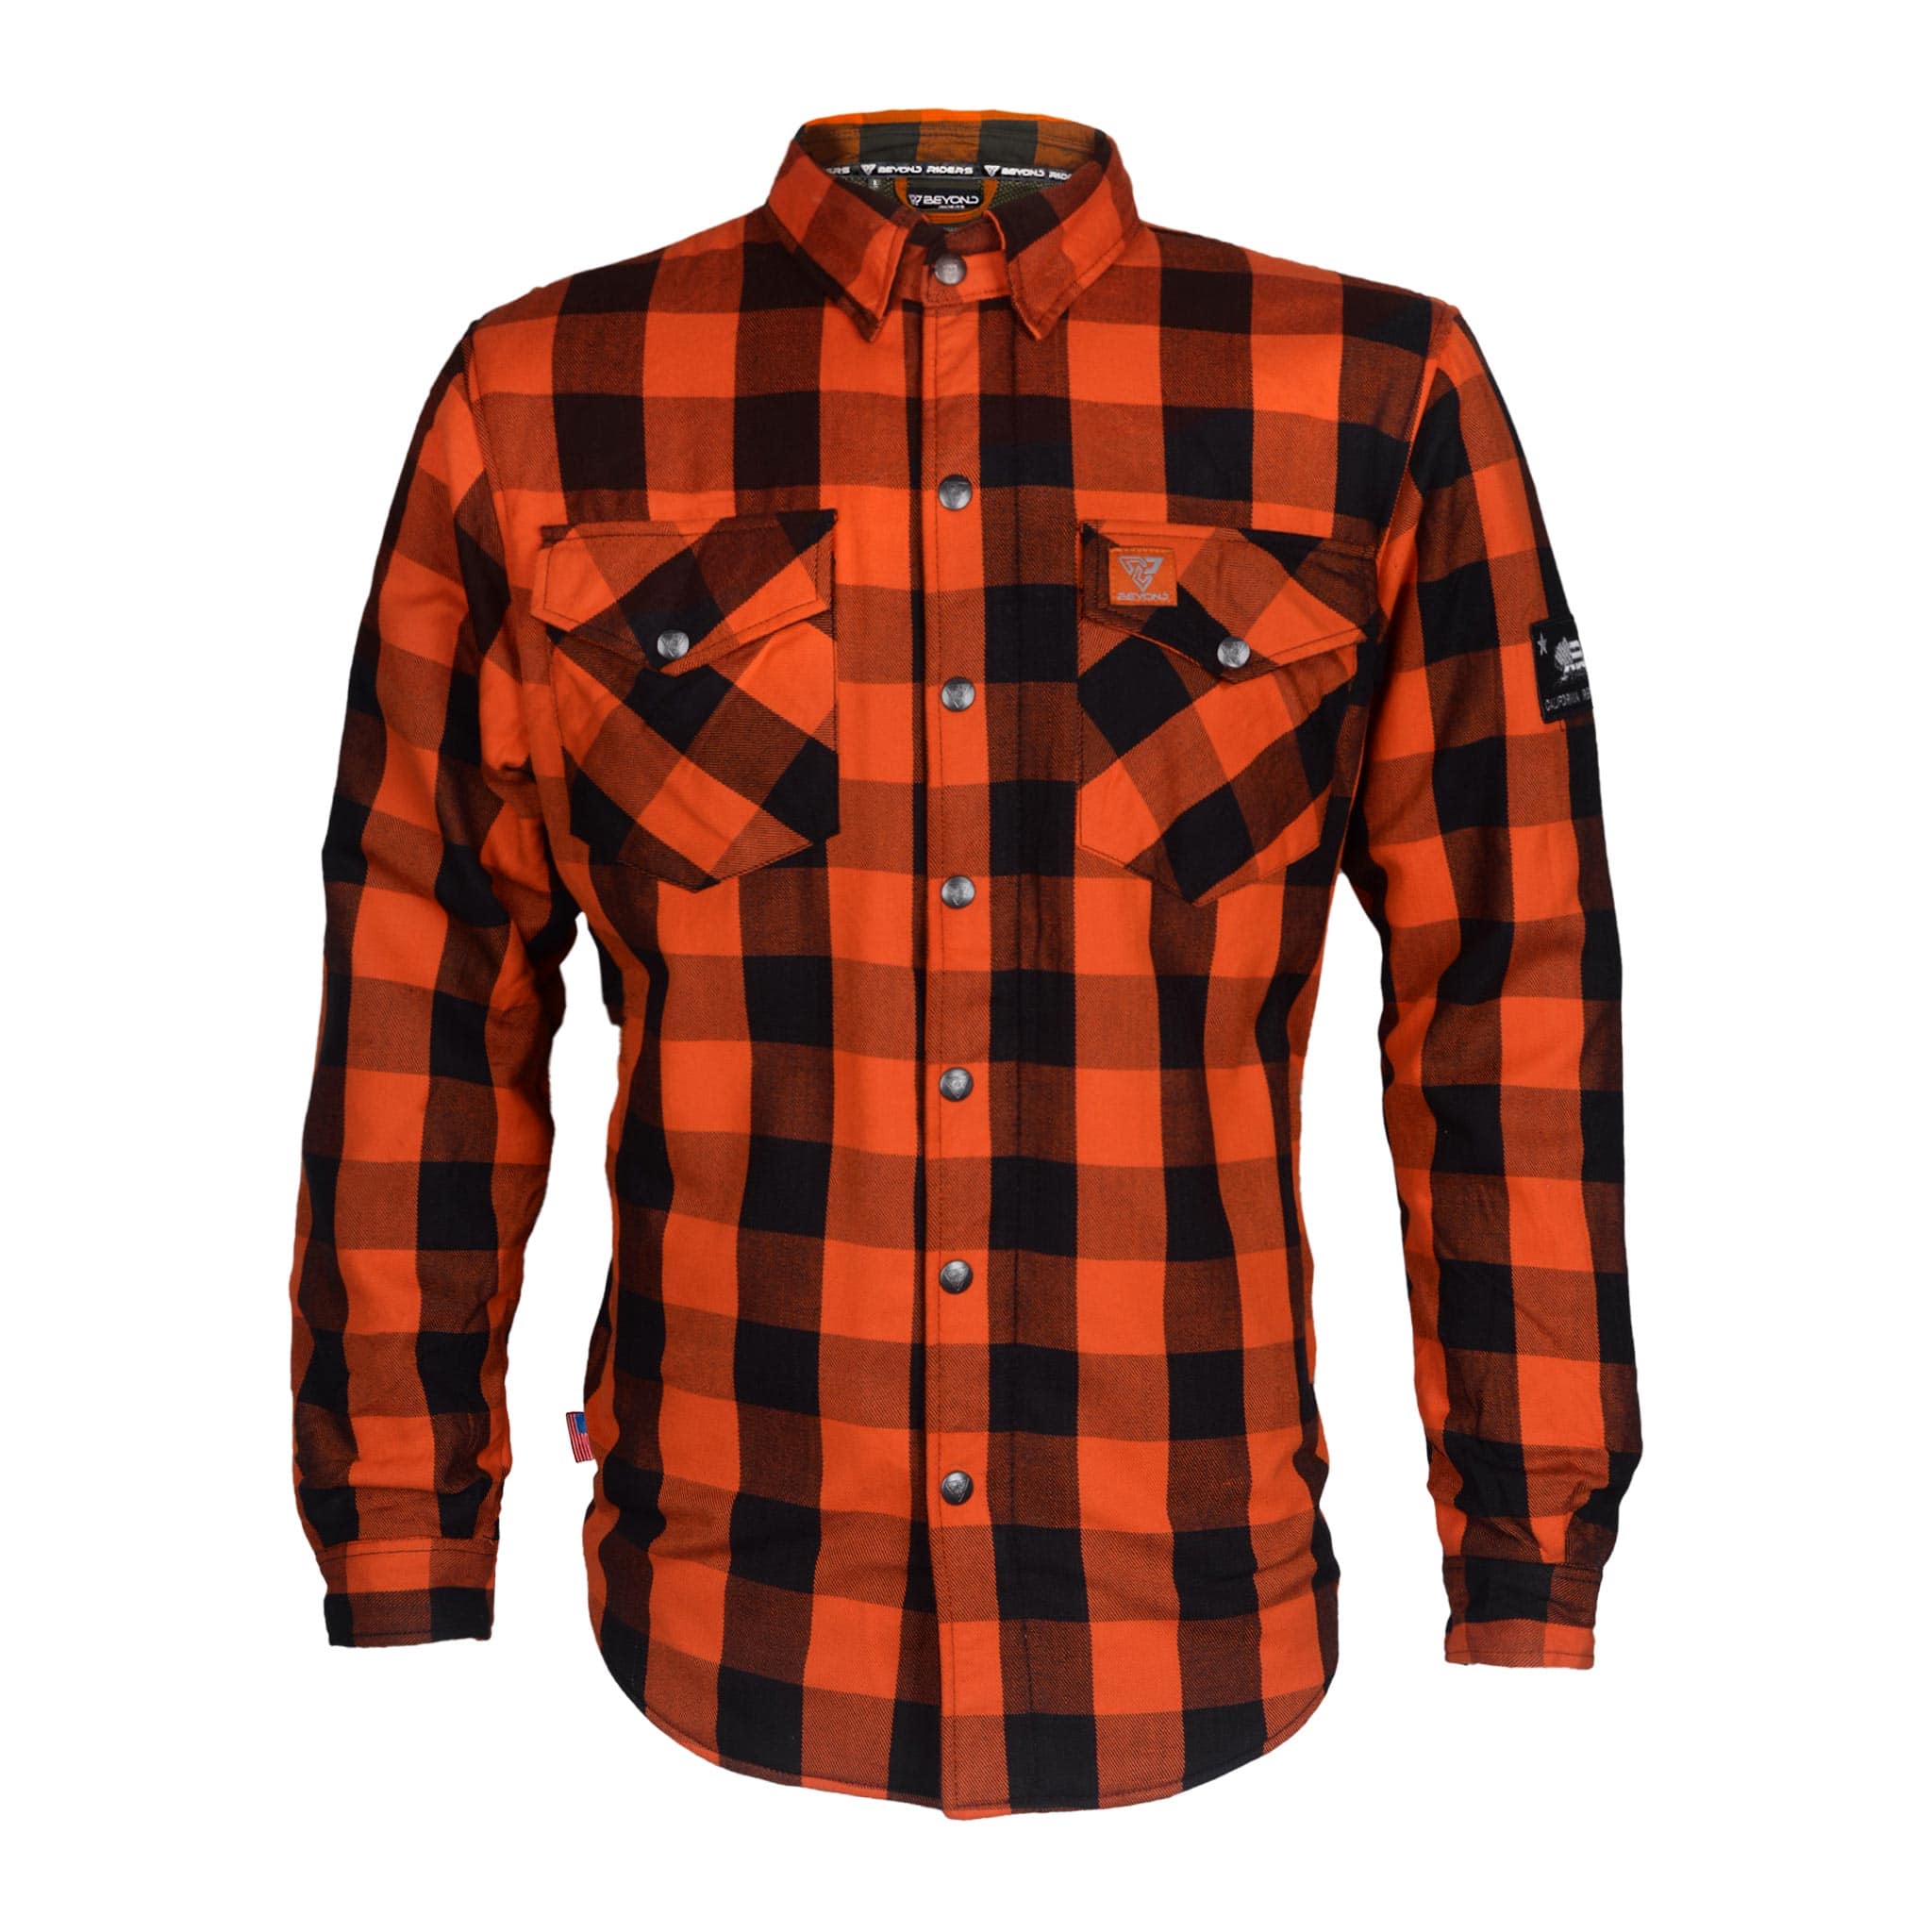 Protective Flannel Shirt "Autumn Blast" - Orange and Black Checkered